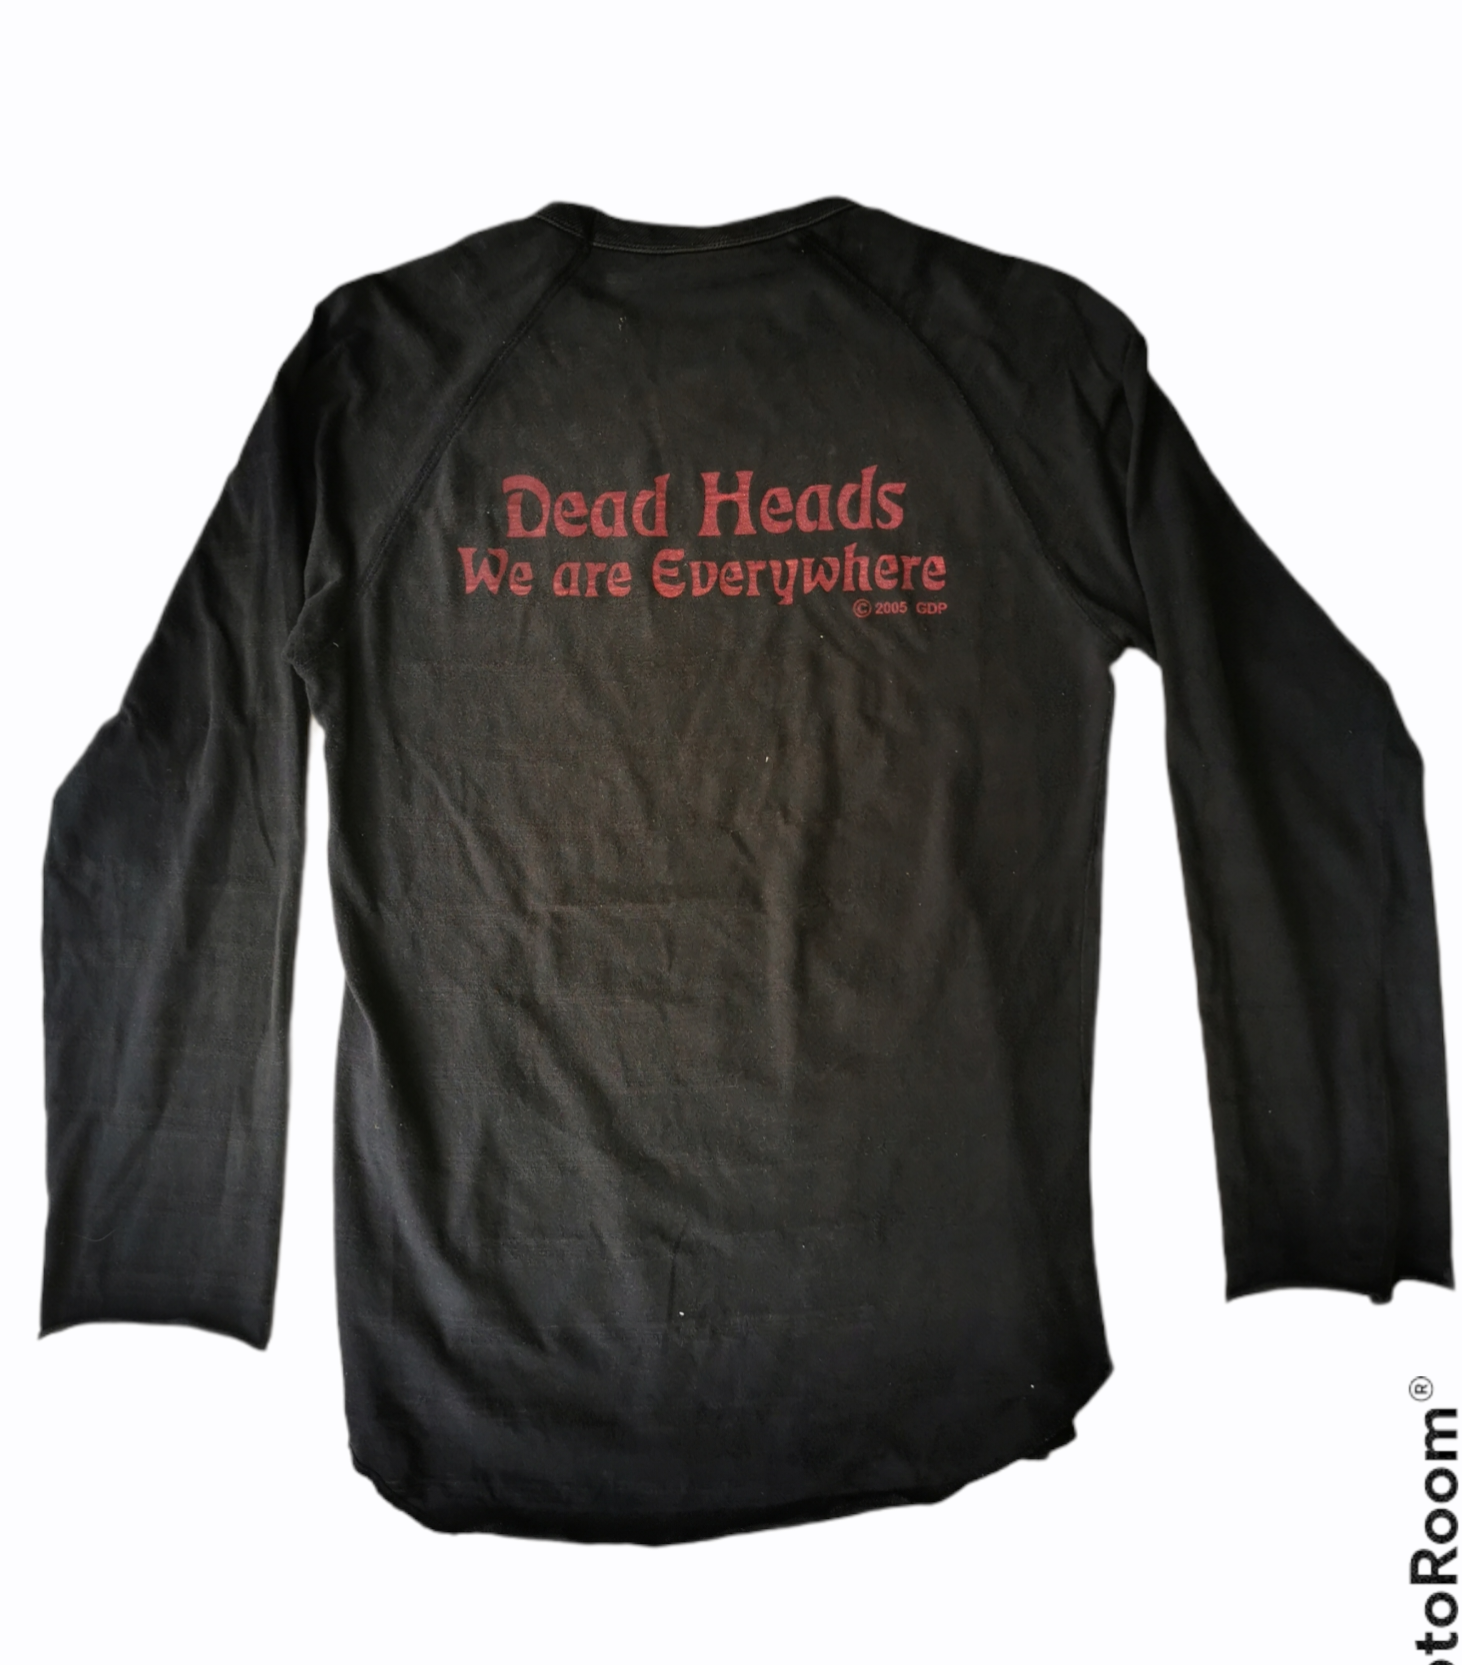 Vintage - Vintage 2005 Grateful Dead Dead Heads Longsleeve Tee - 2